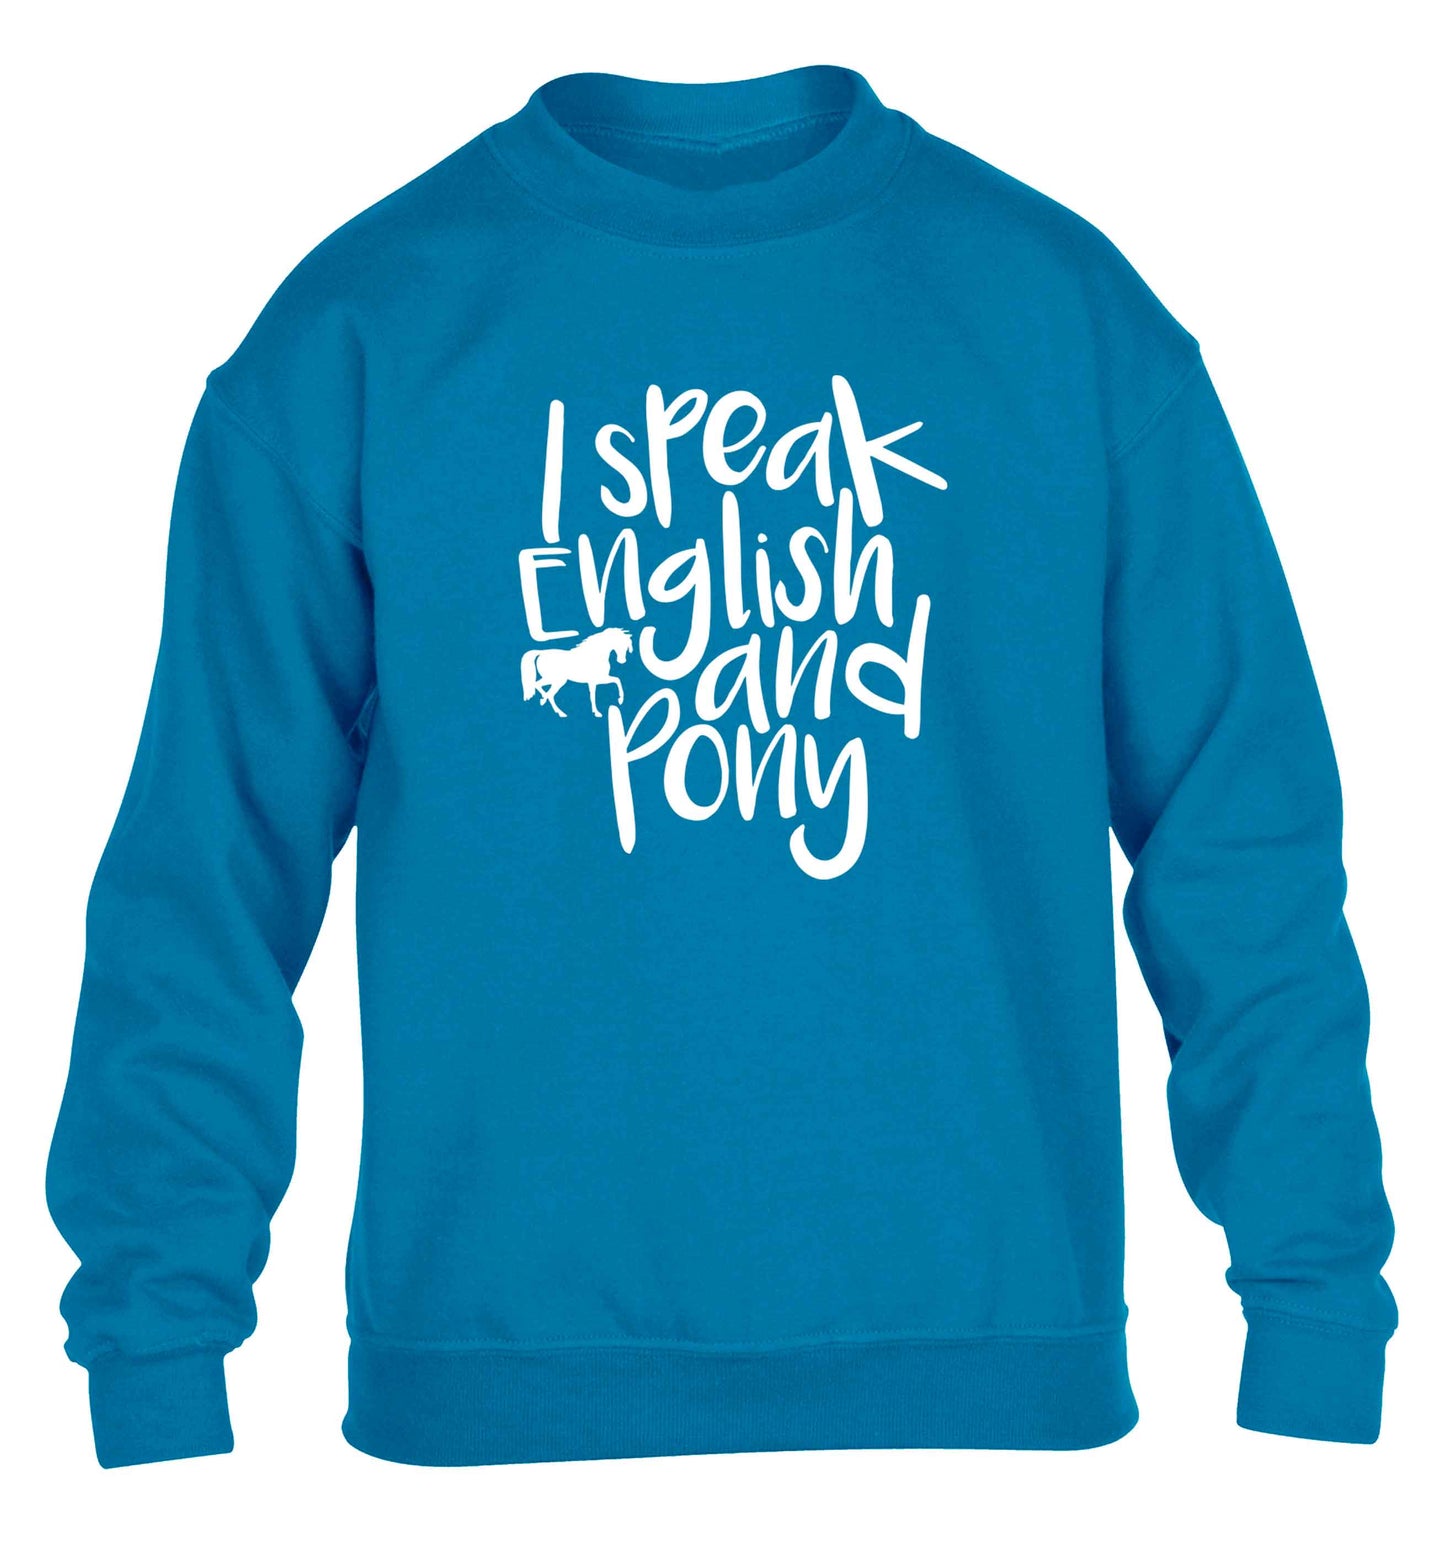 I speak English and pony children's blue sweater 12-13 Years